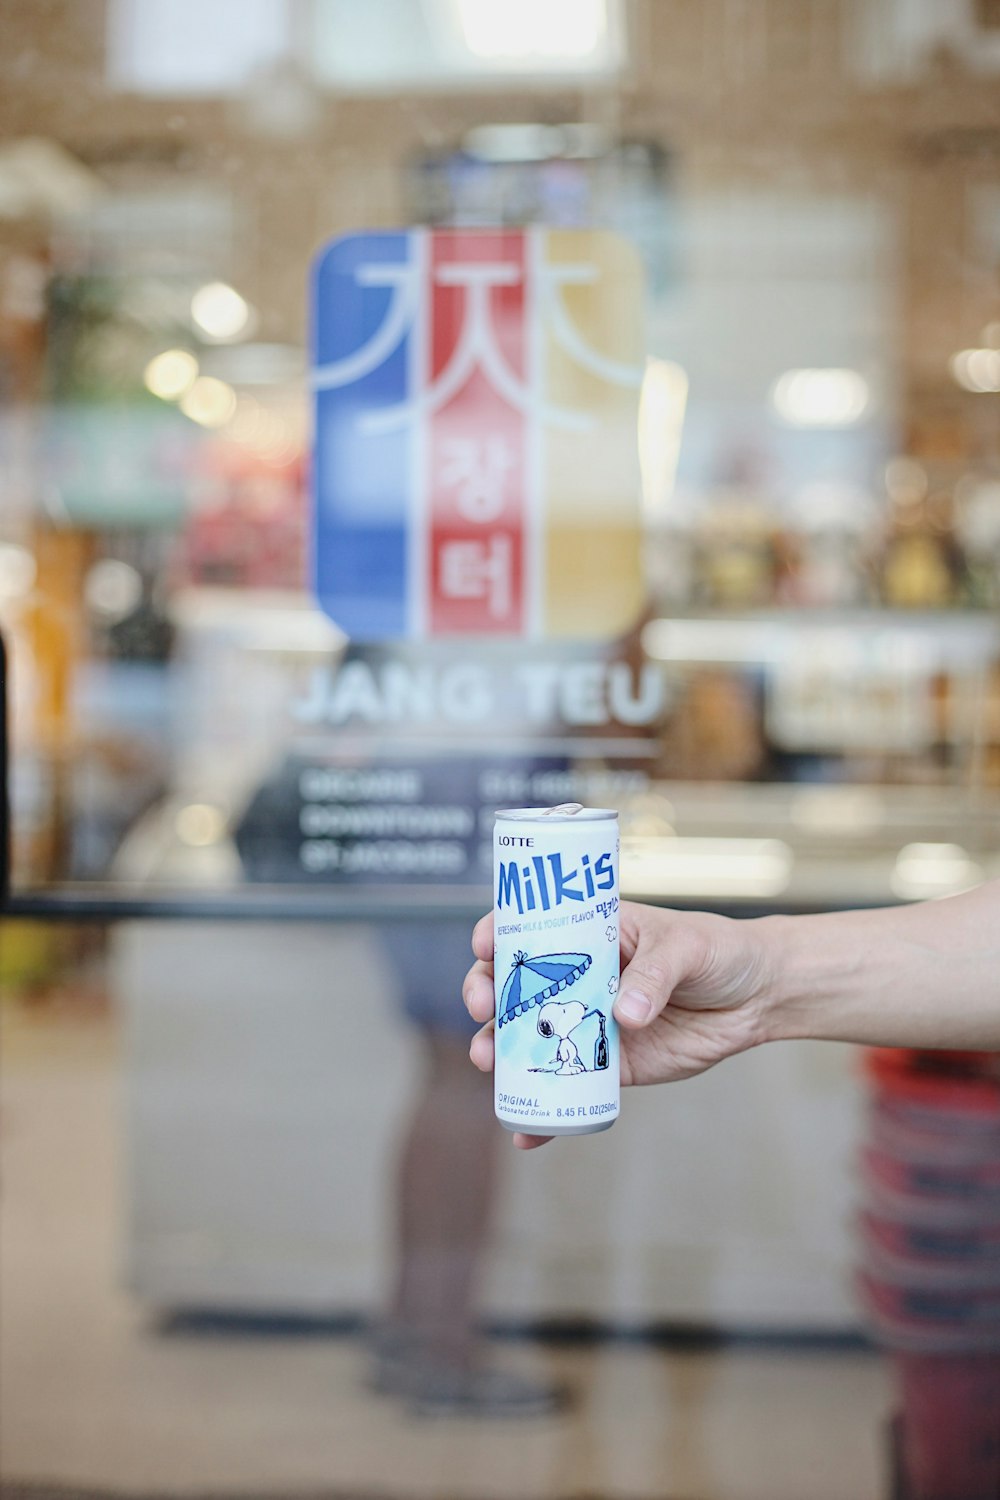 person holding Milkis can besides Jang Teu logo